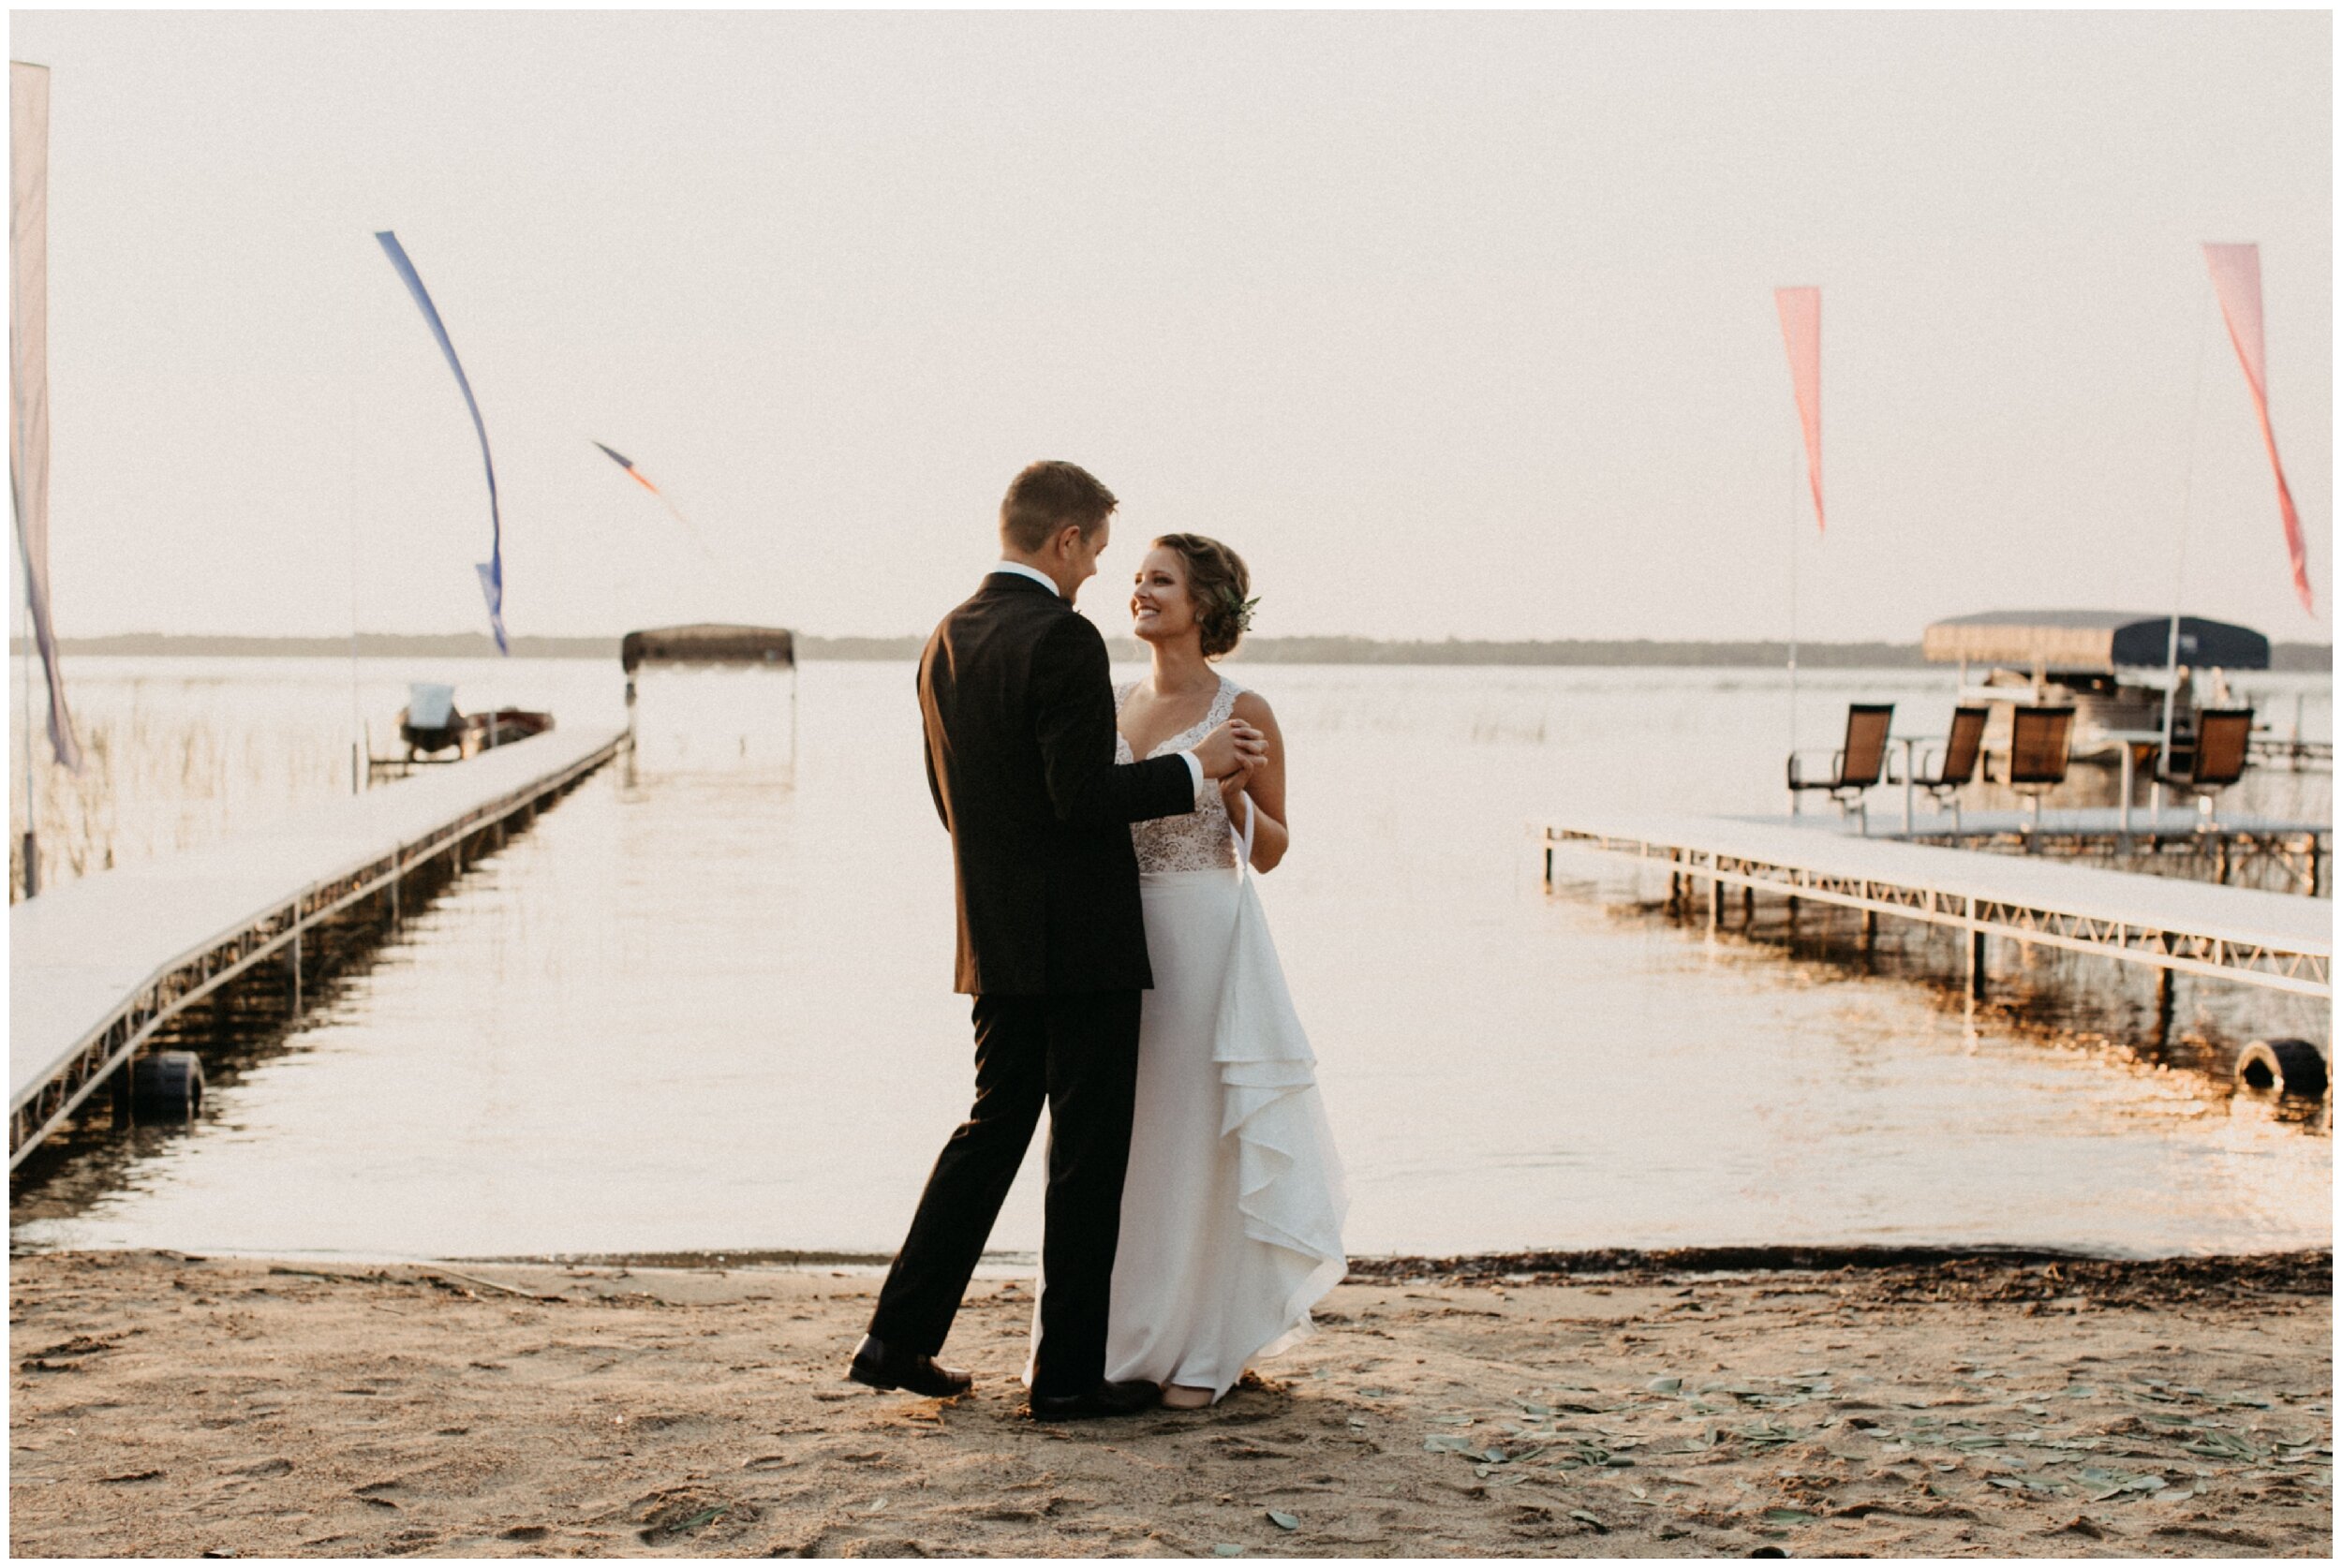 Bride and groom dancing on sandy beach during Brainerd, Minnesota lakeside cabin wedding